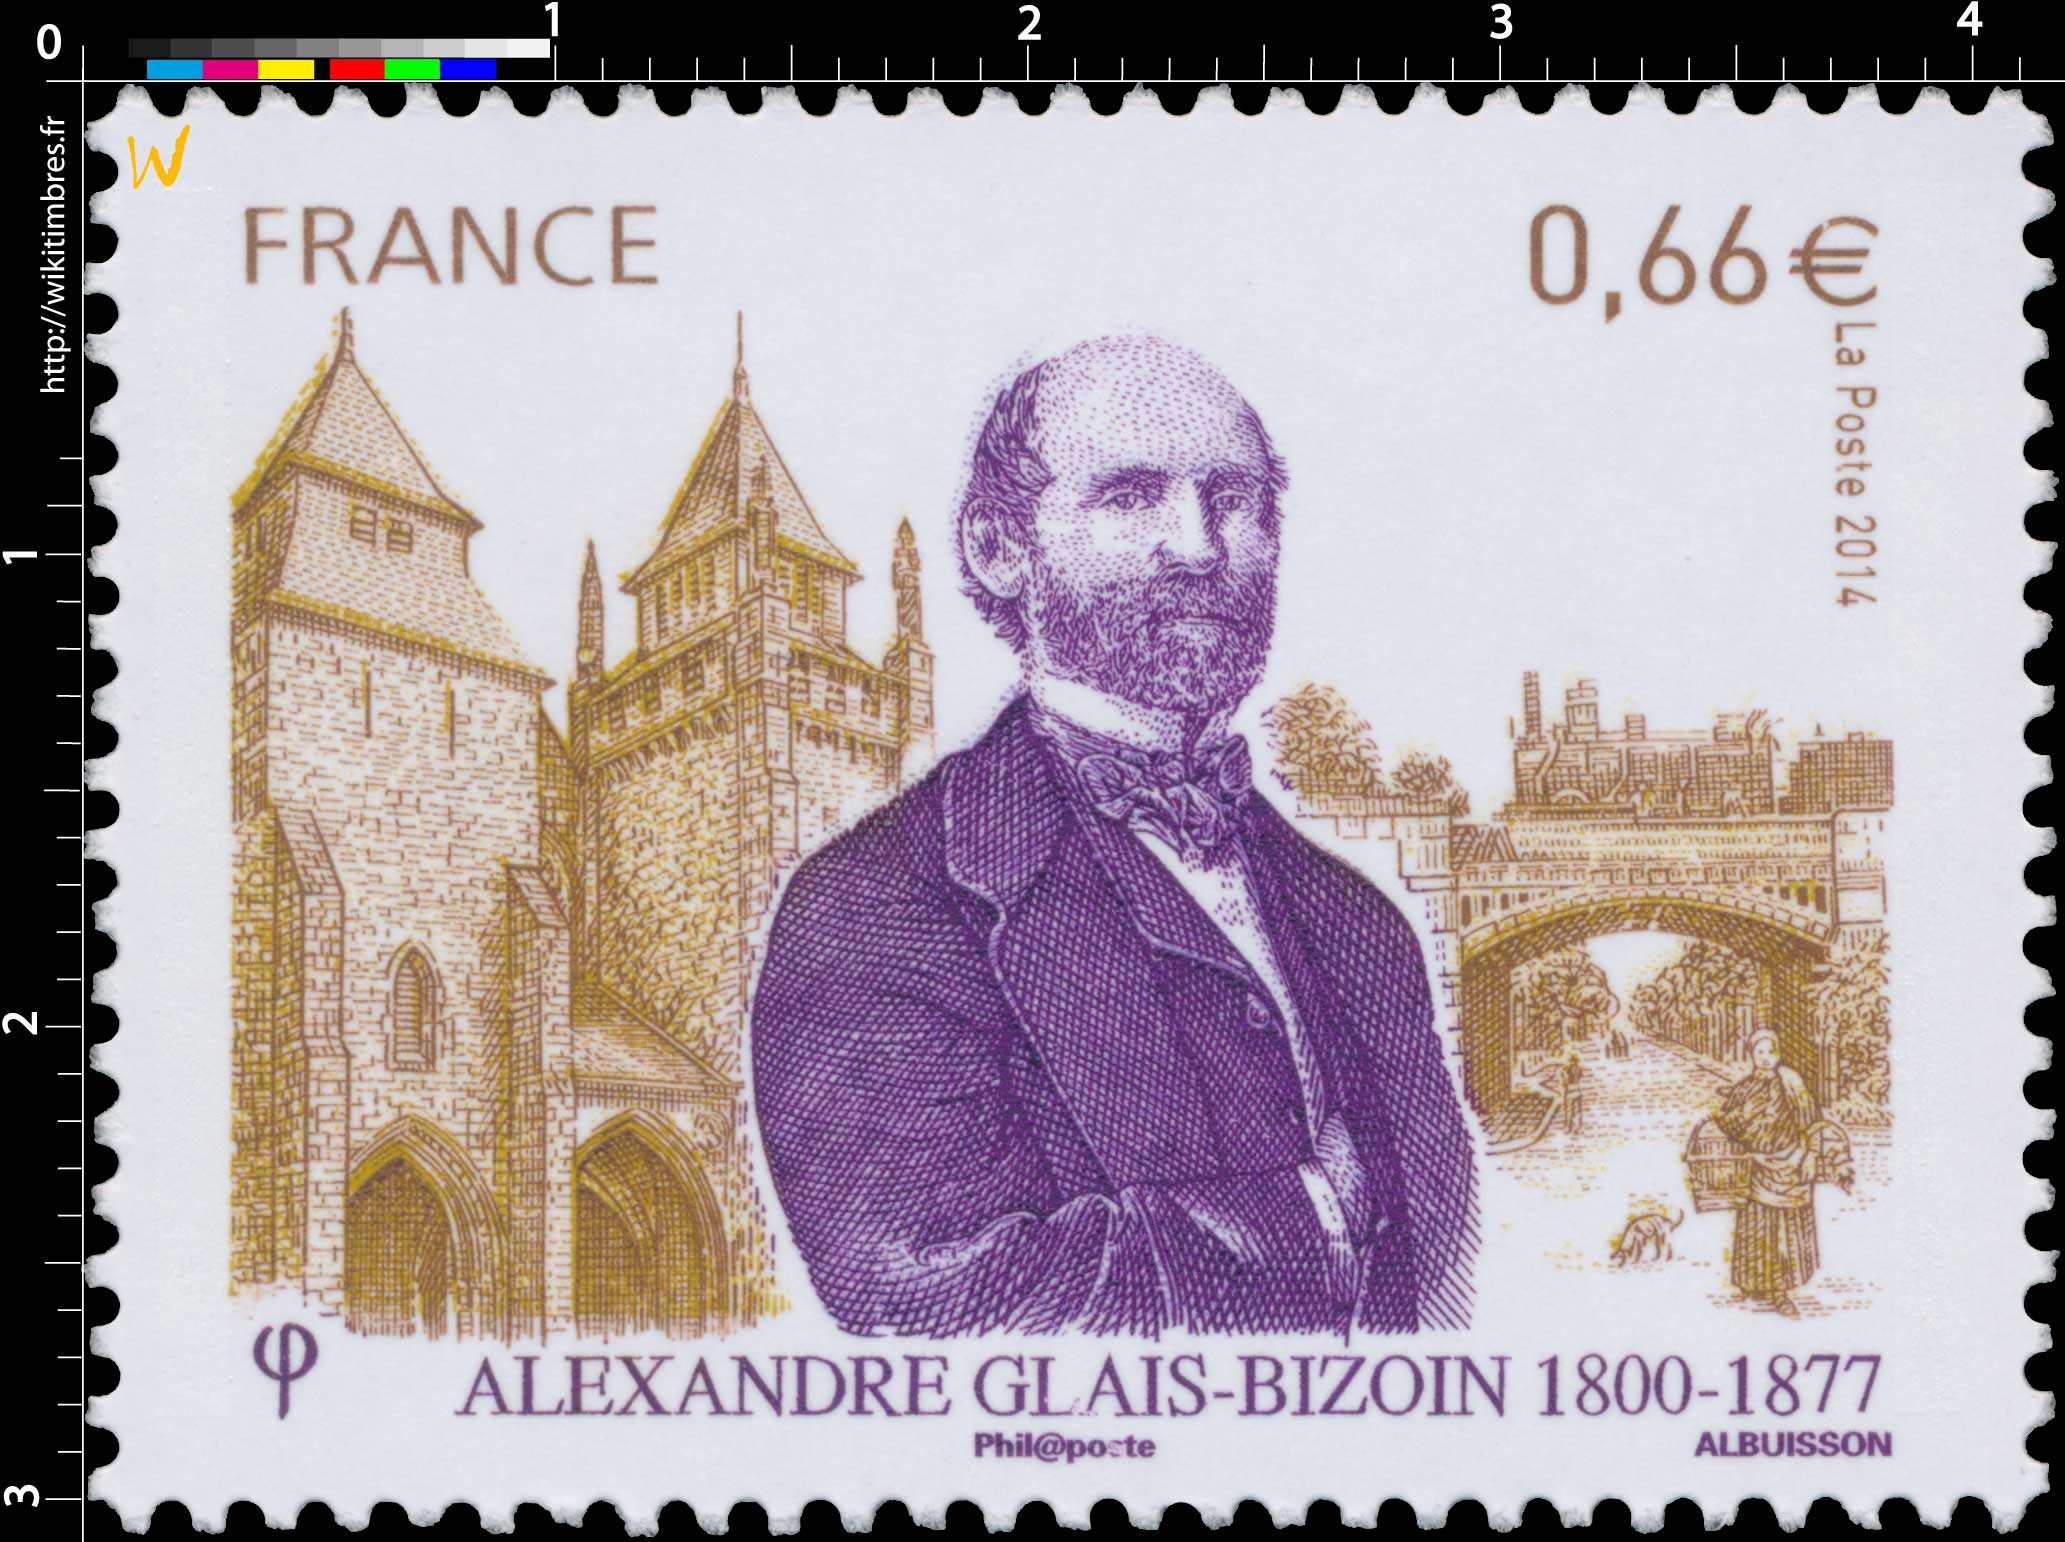 2014 Alexandre Glais-Bizoin 1800 – 1877